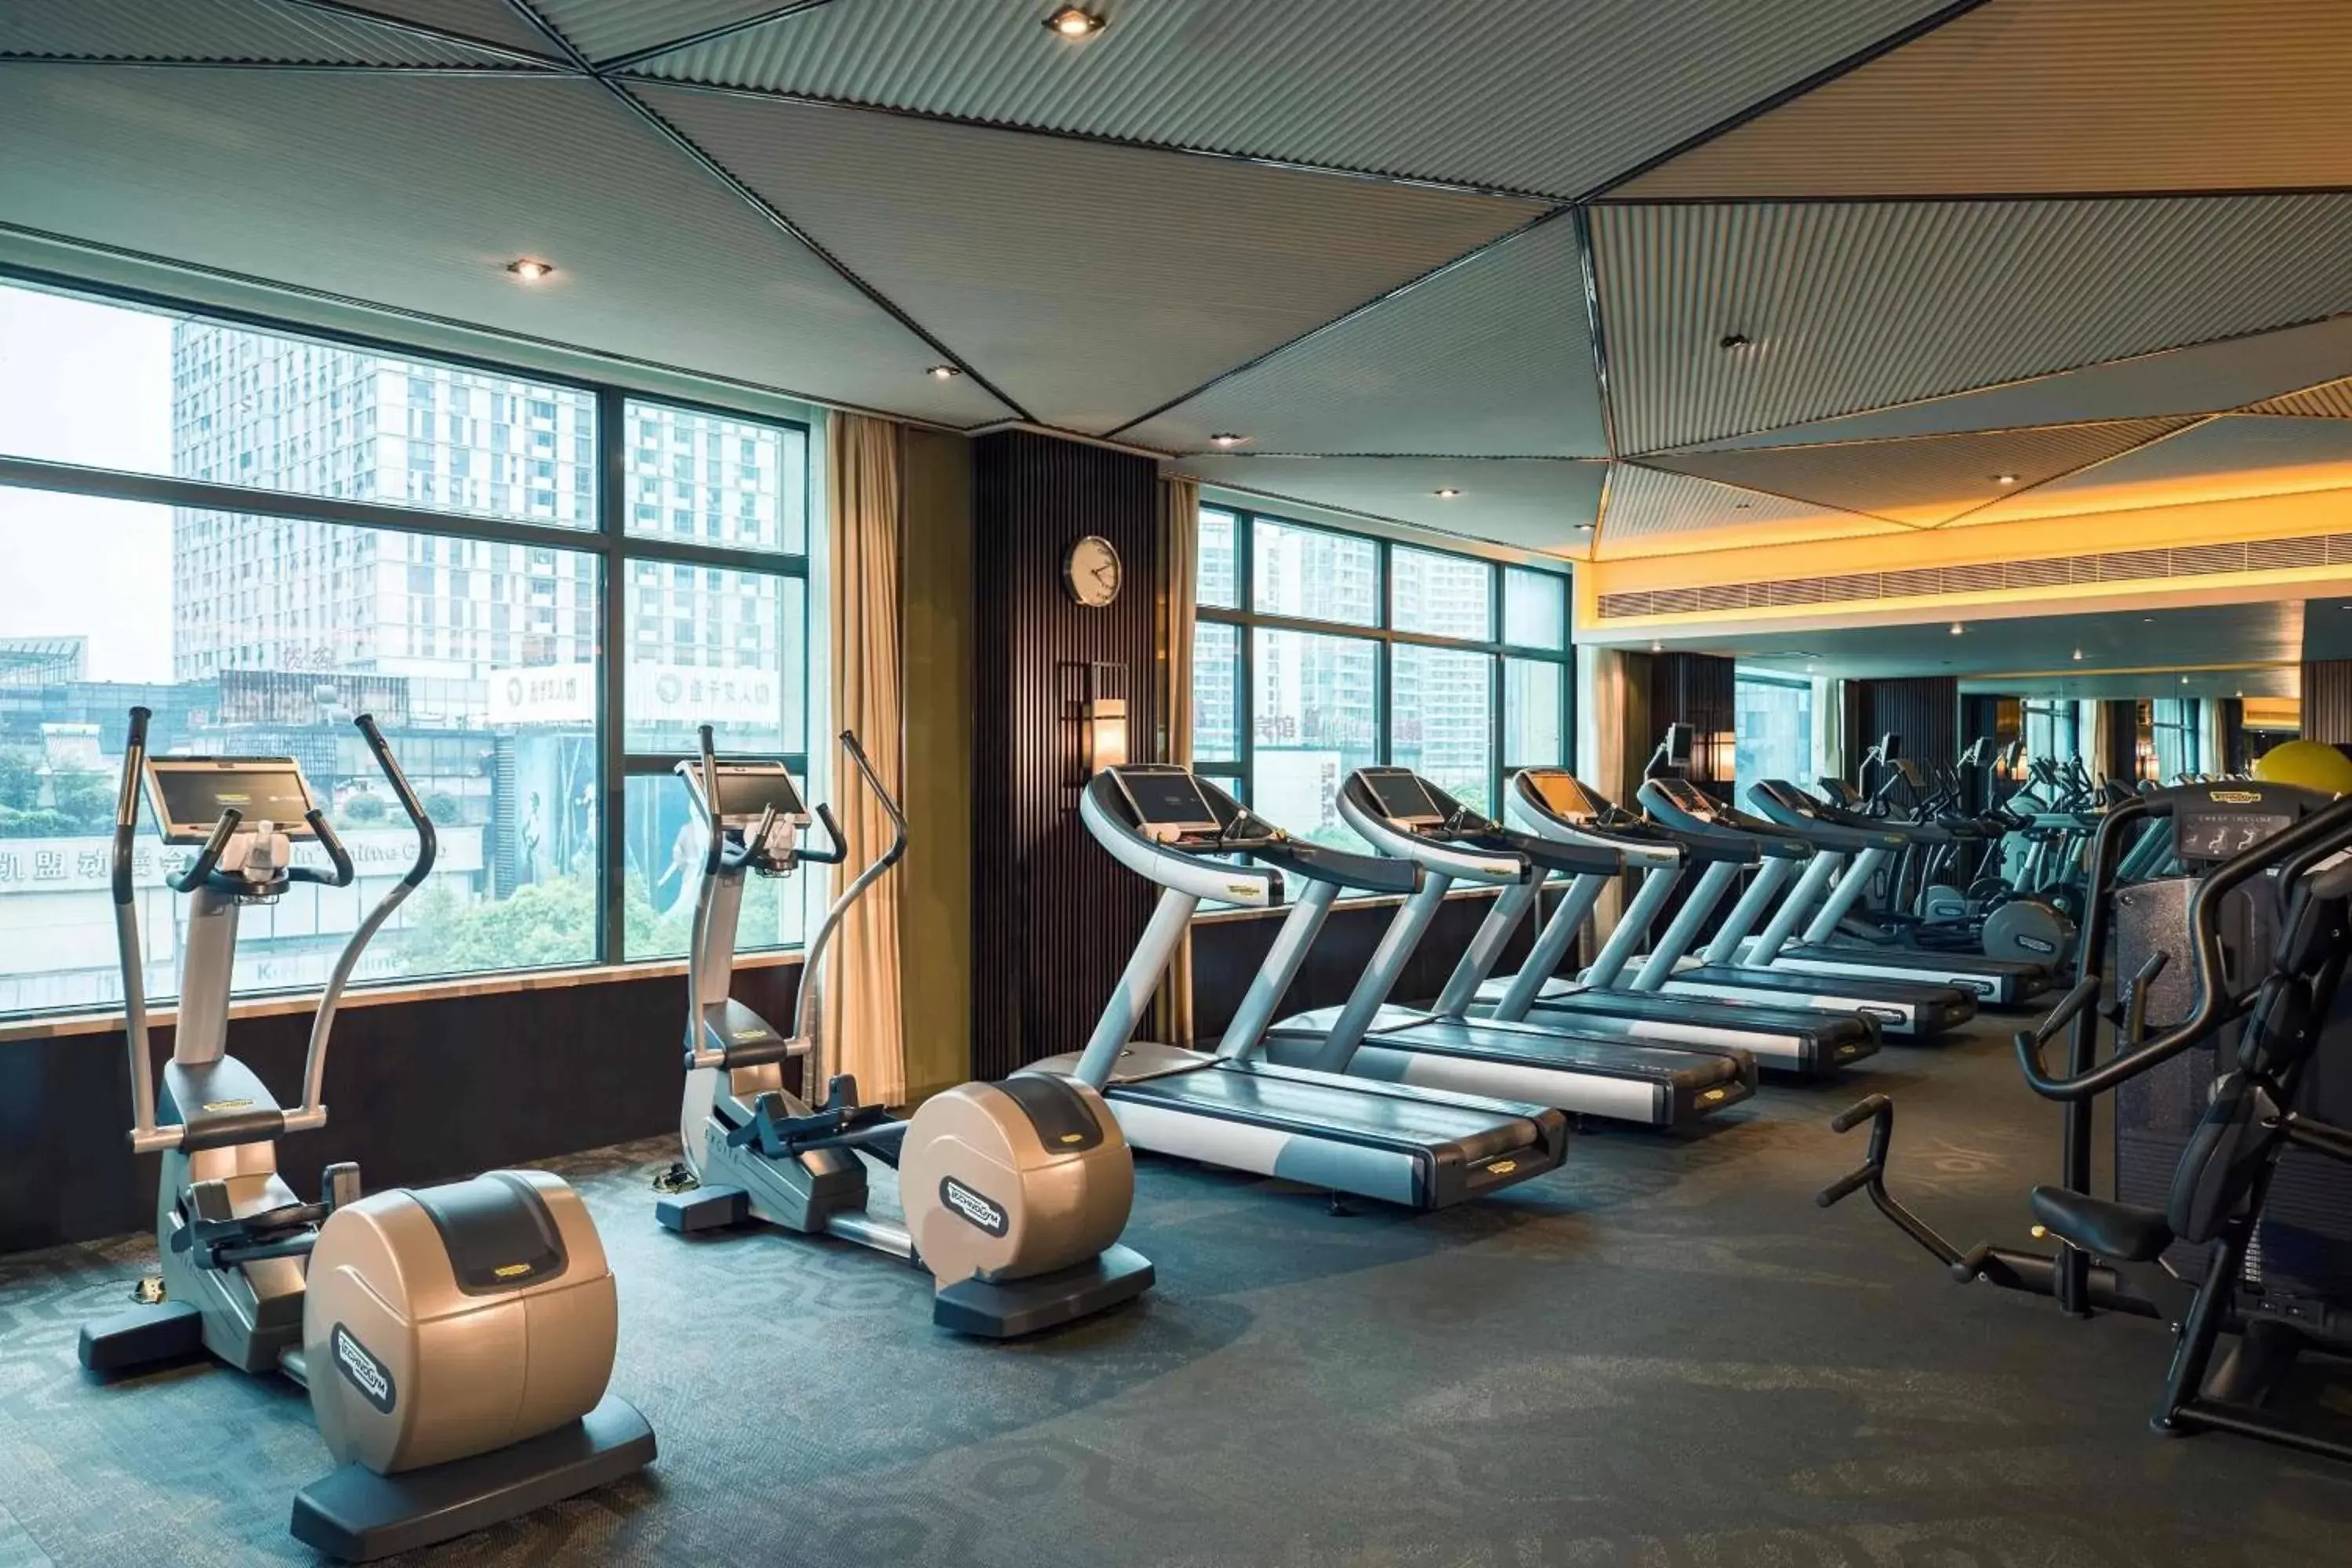 Fitness centre/facilities, Fitness Center/Facilities in Renaissance Suzhou Hotel